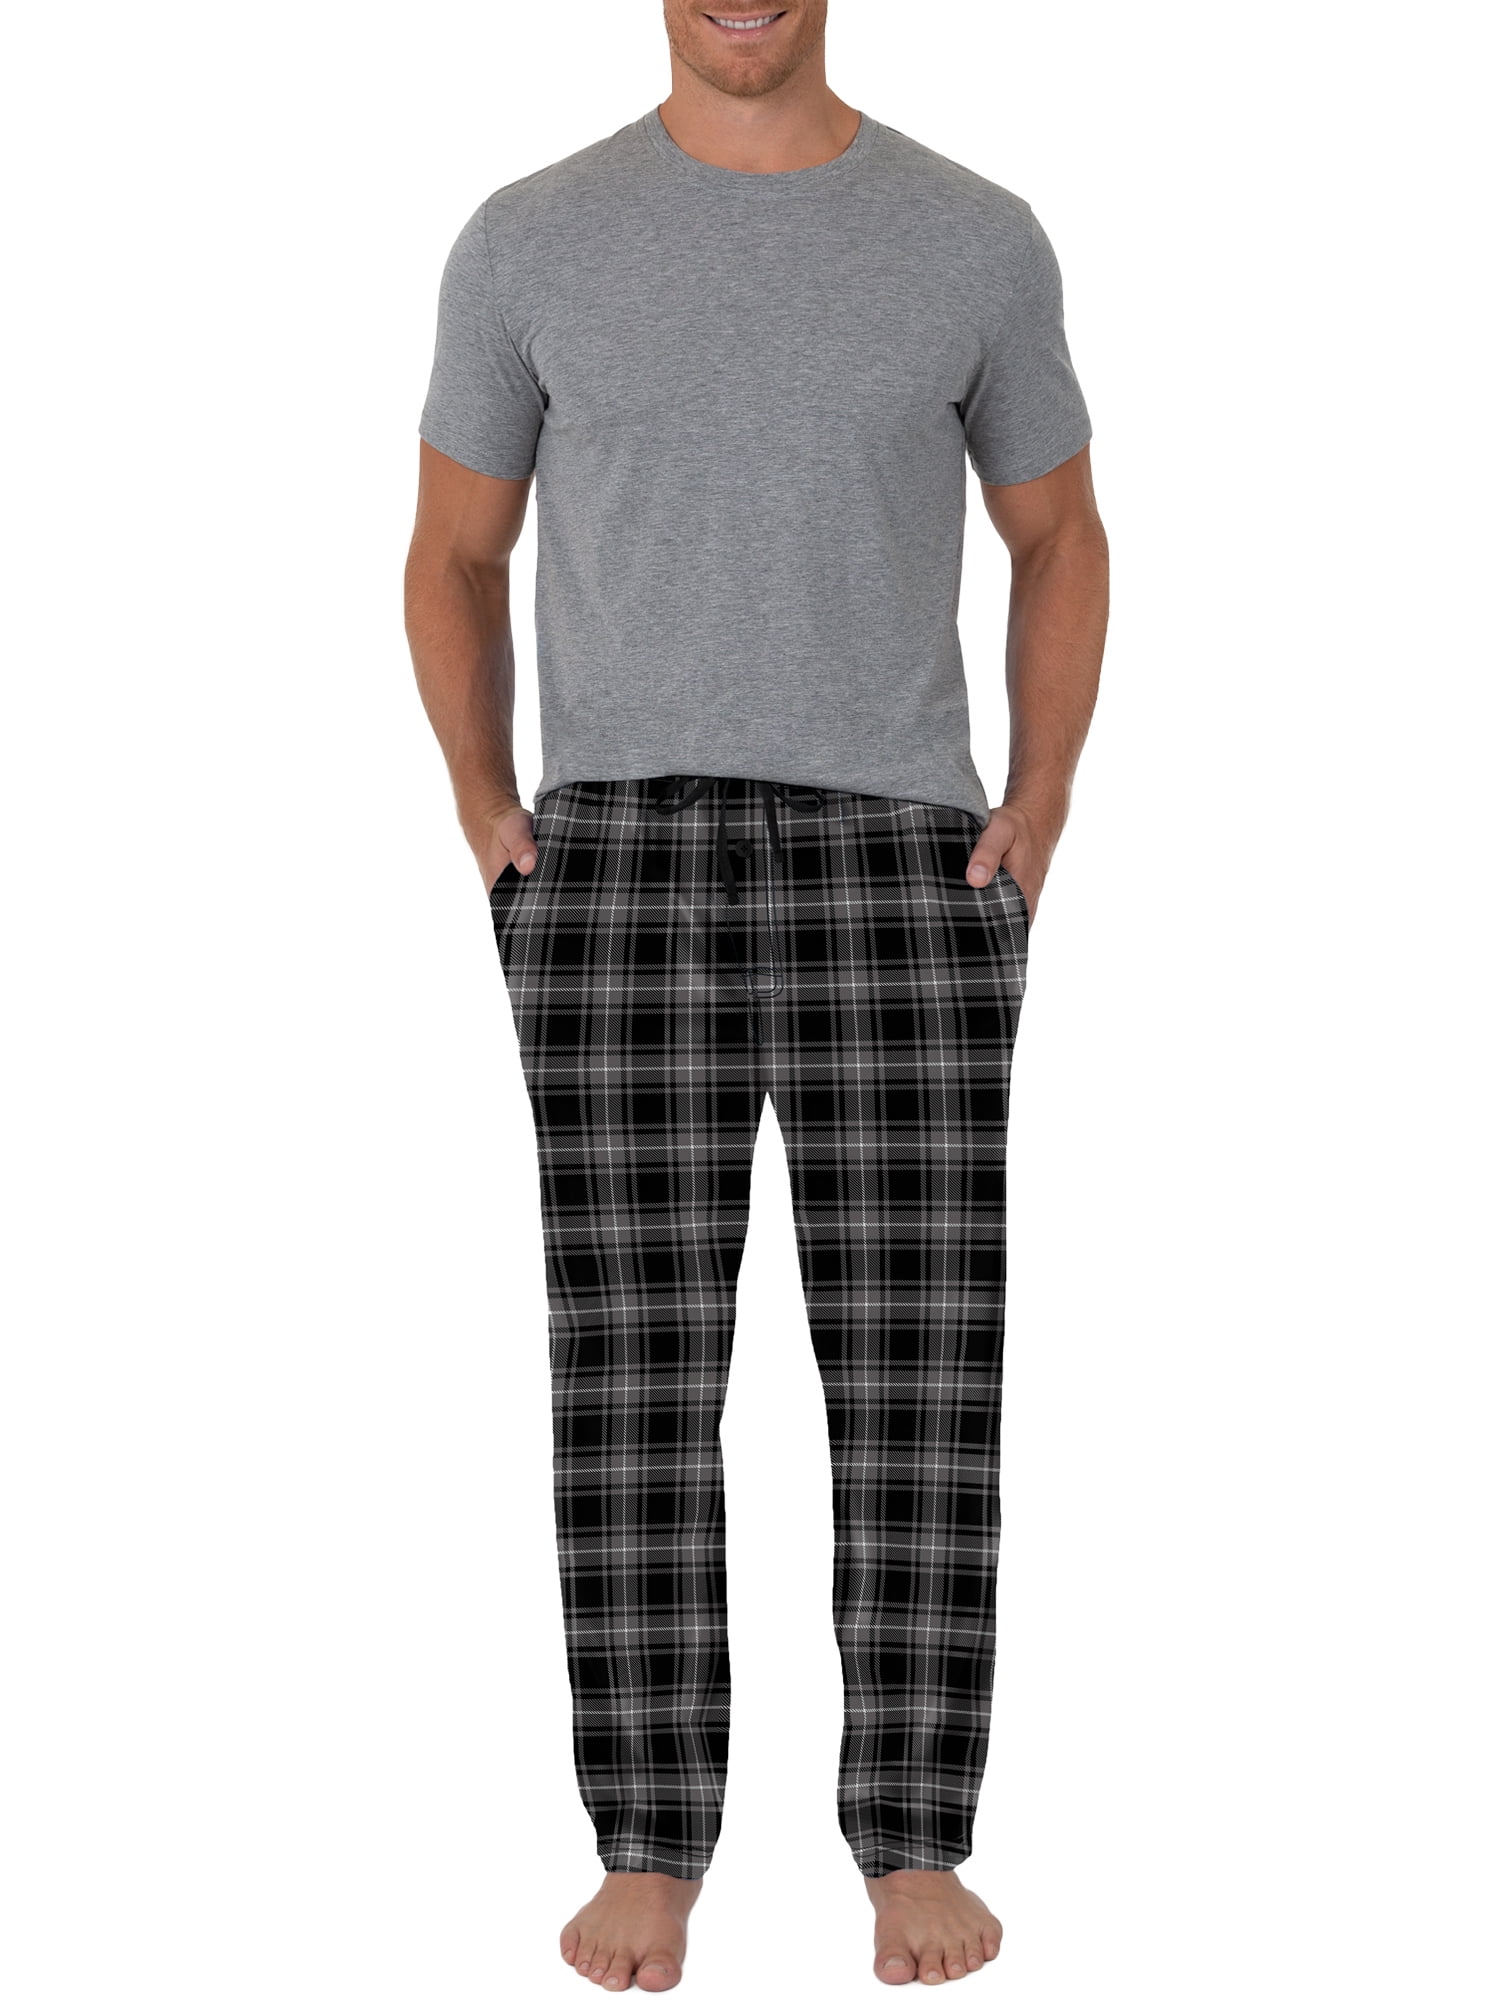 Nautica Mens Lounge Pajama Fleece Pants 2 Pack Gray Plaid M L XL